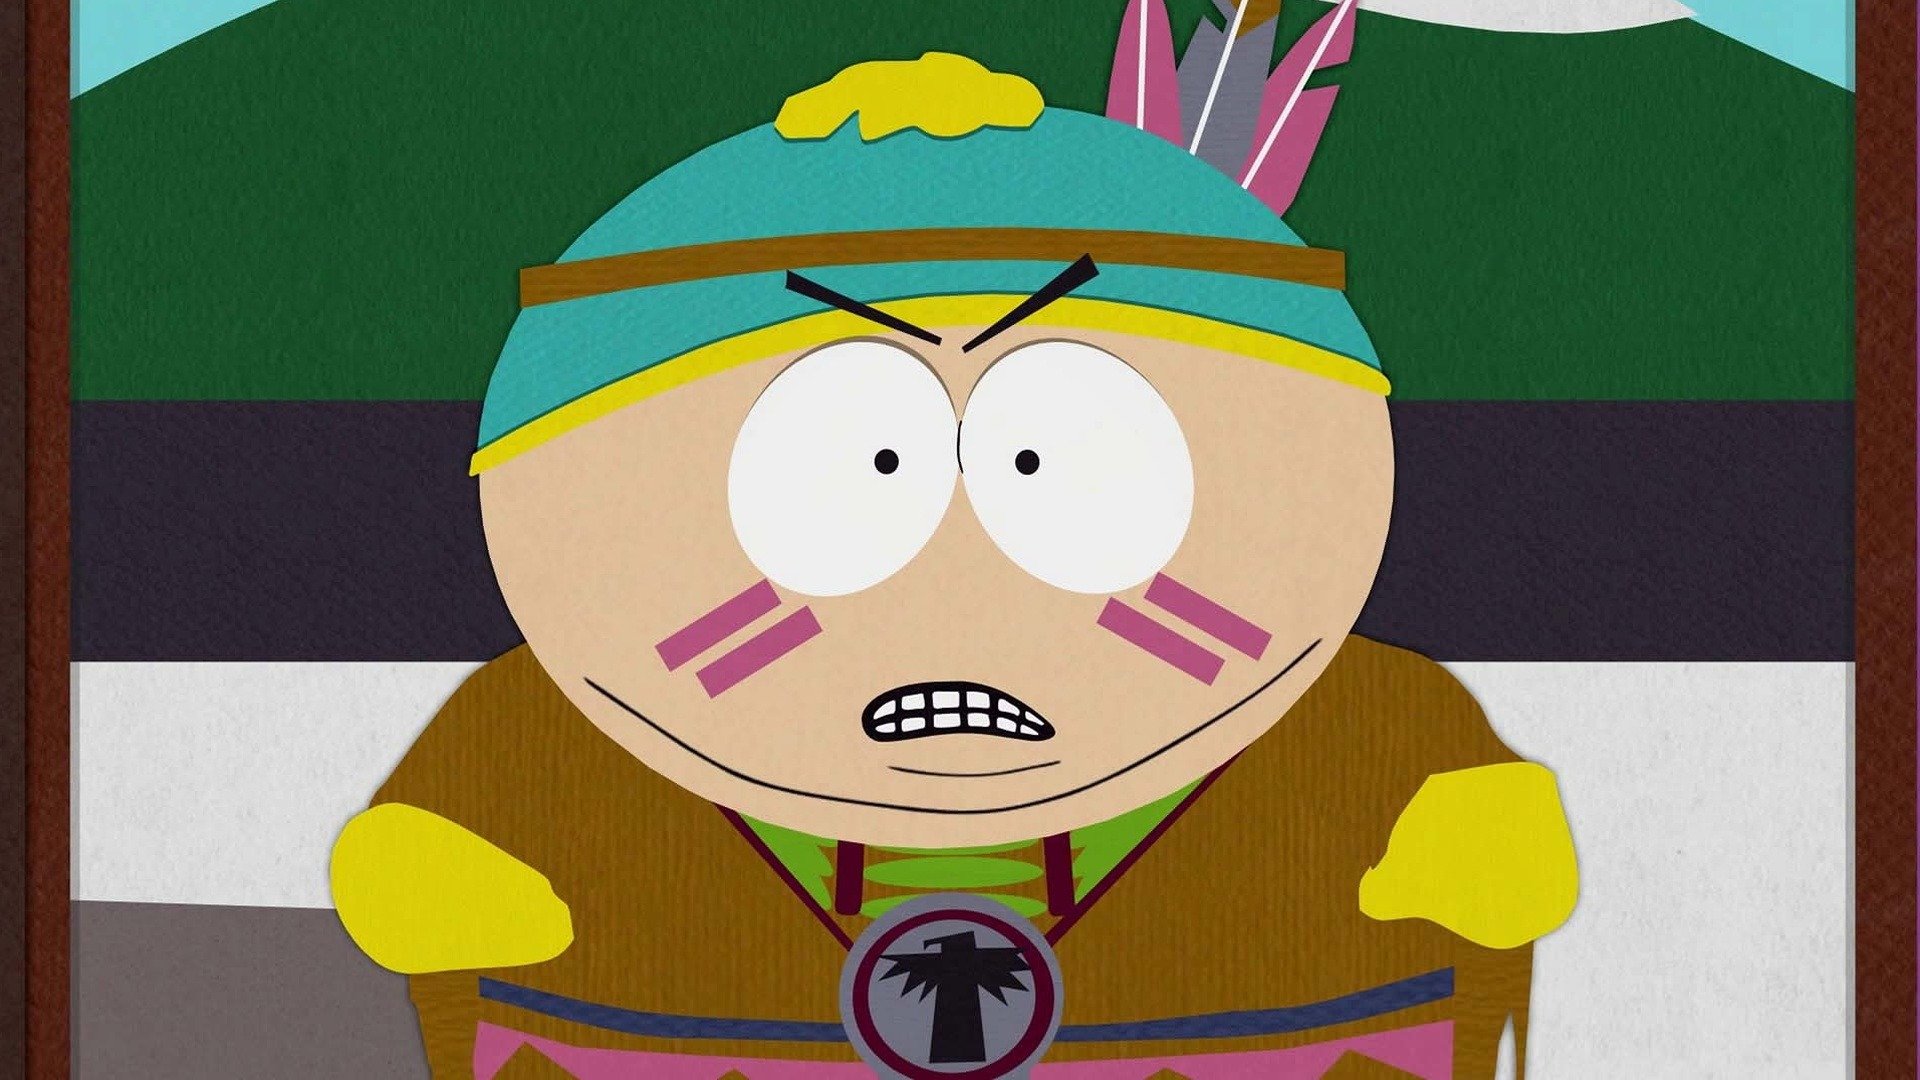 13. Cartman's Mom Is a Dirty Slut